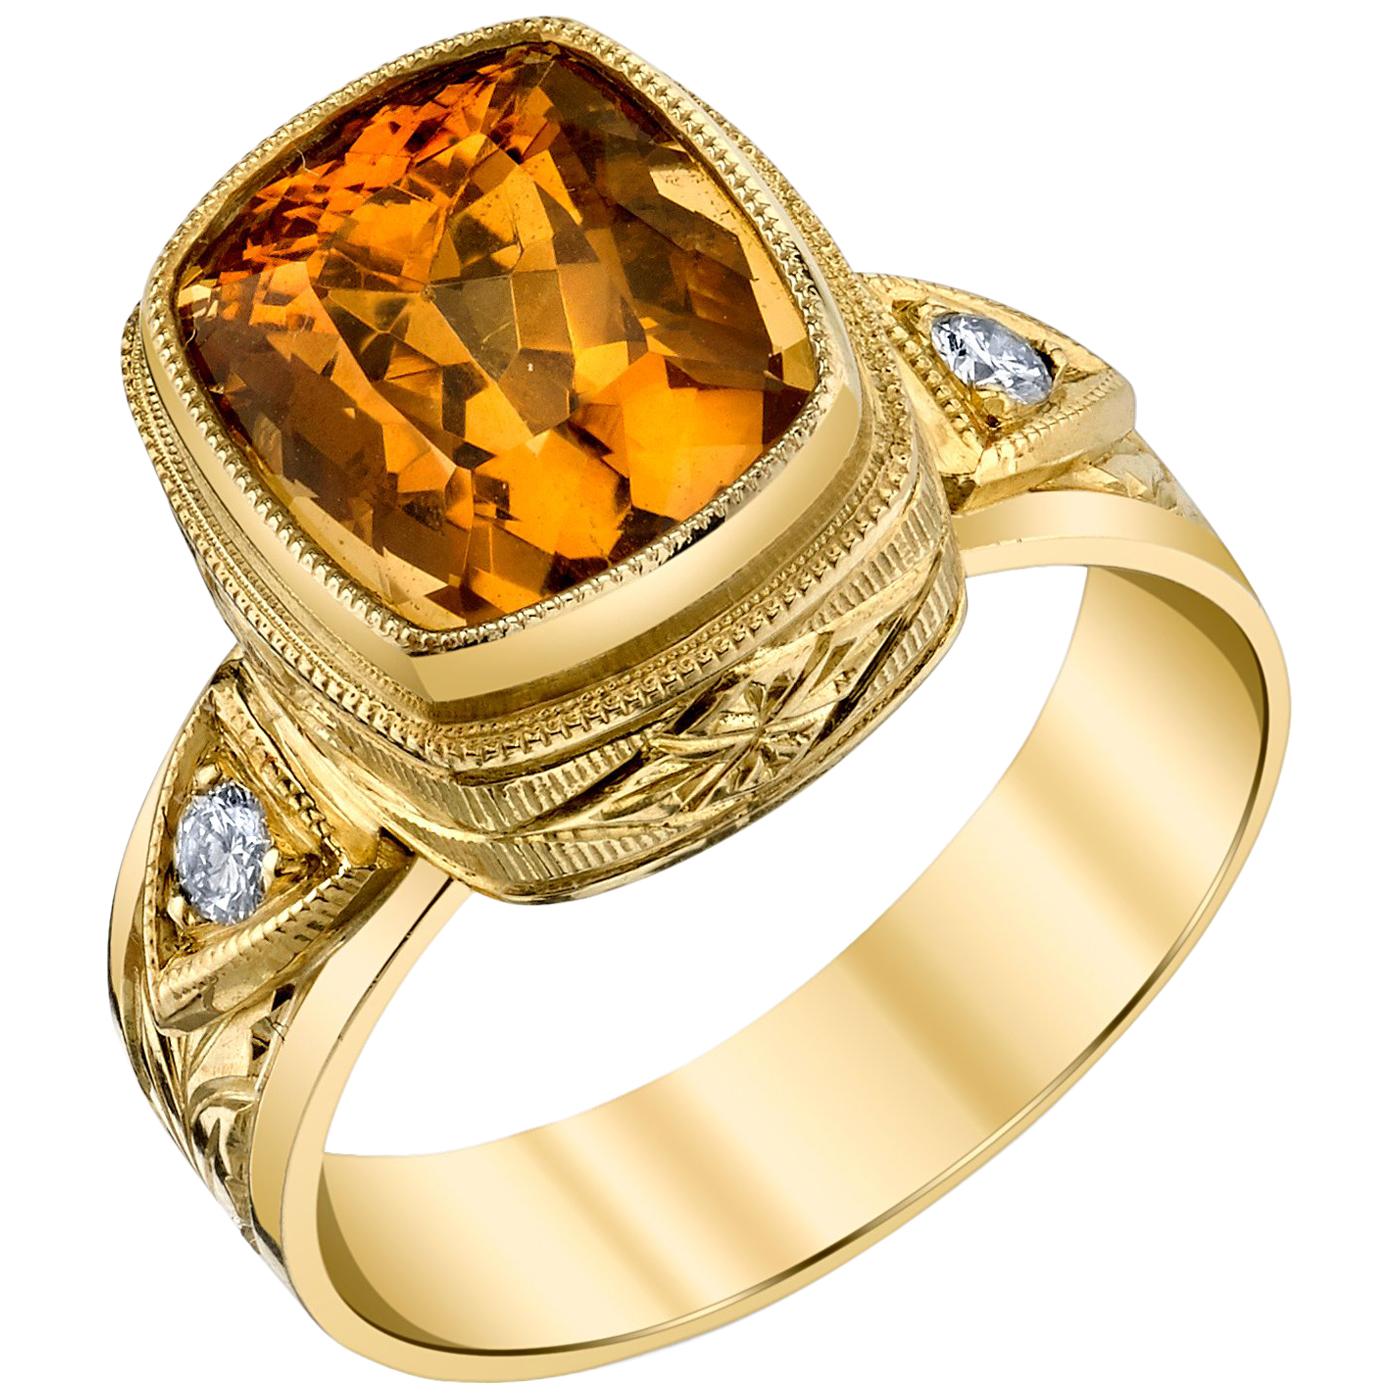 5.73 ct. Orange Zircon and Diamond Band Ring in 18k Yellow Gold